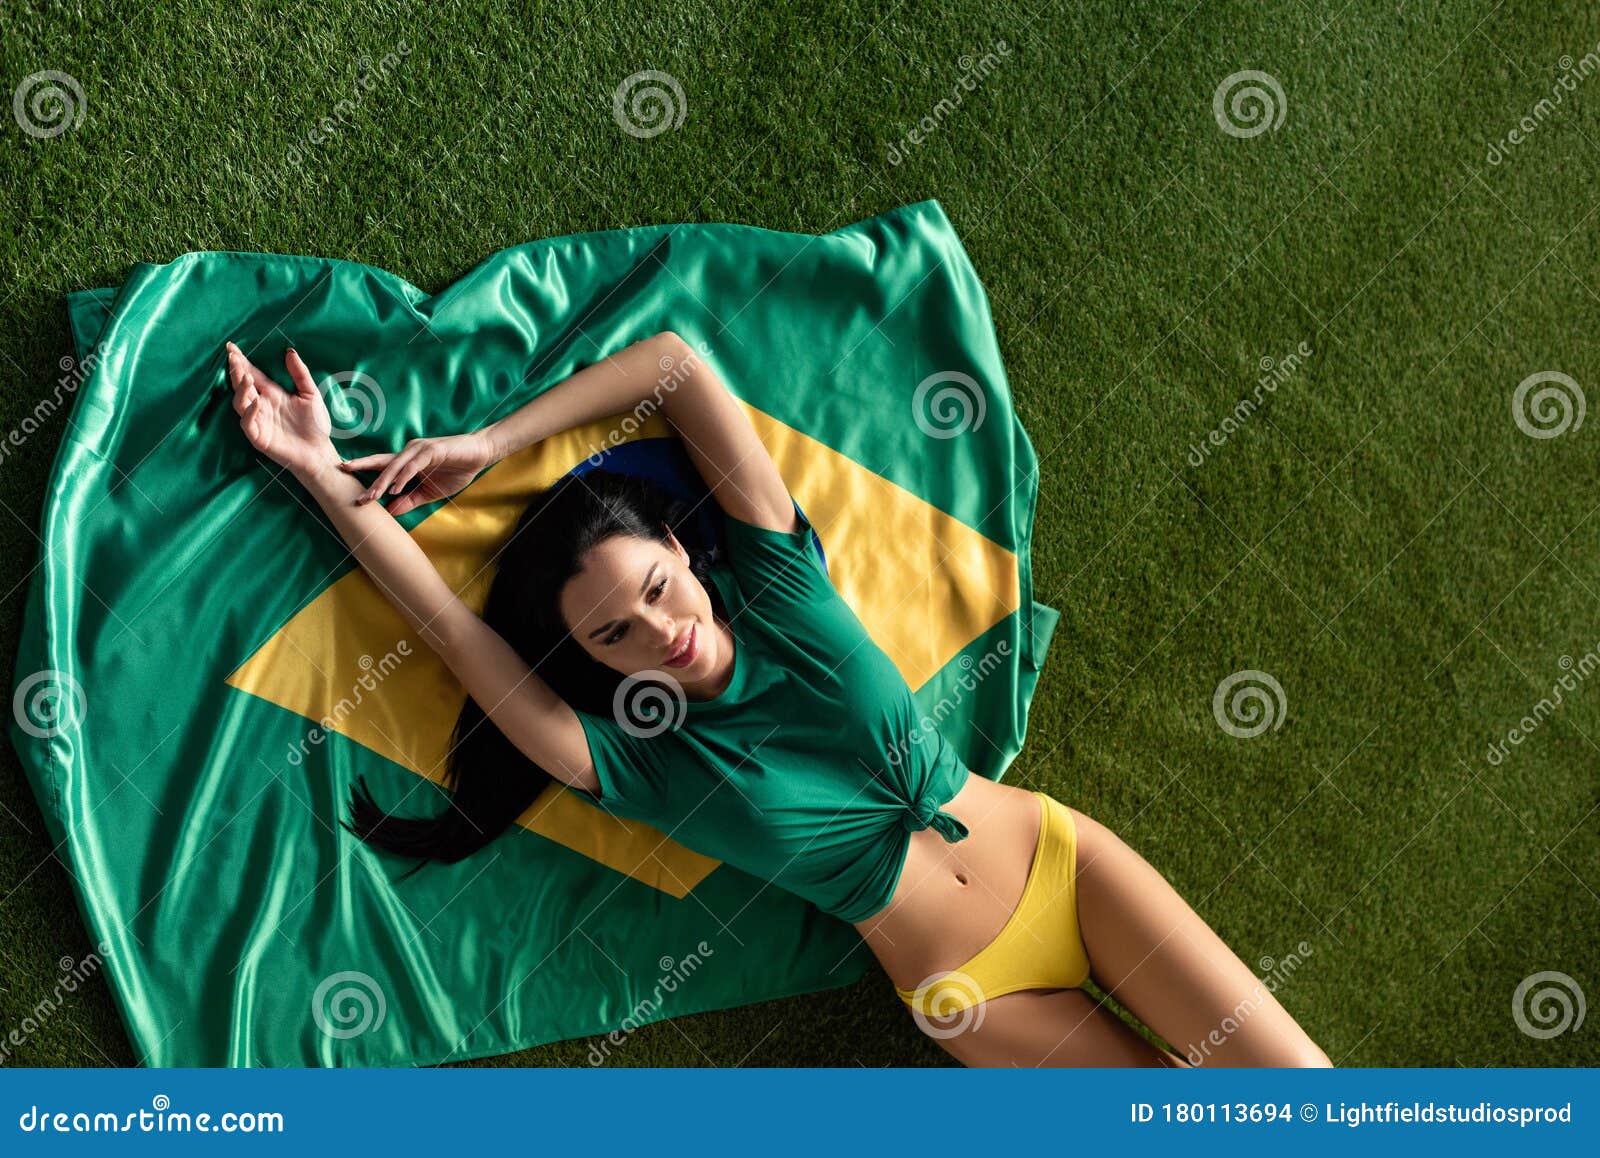 Brazilian Sexy Girls Pics